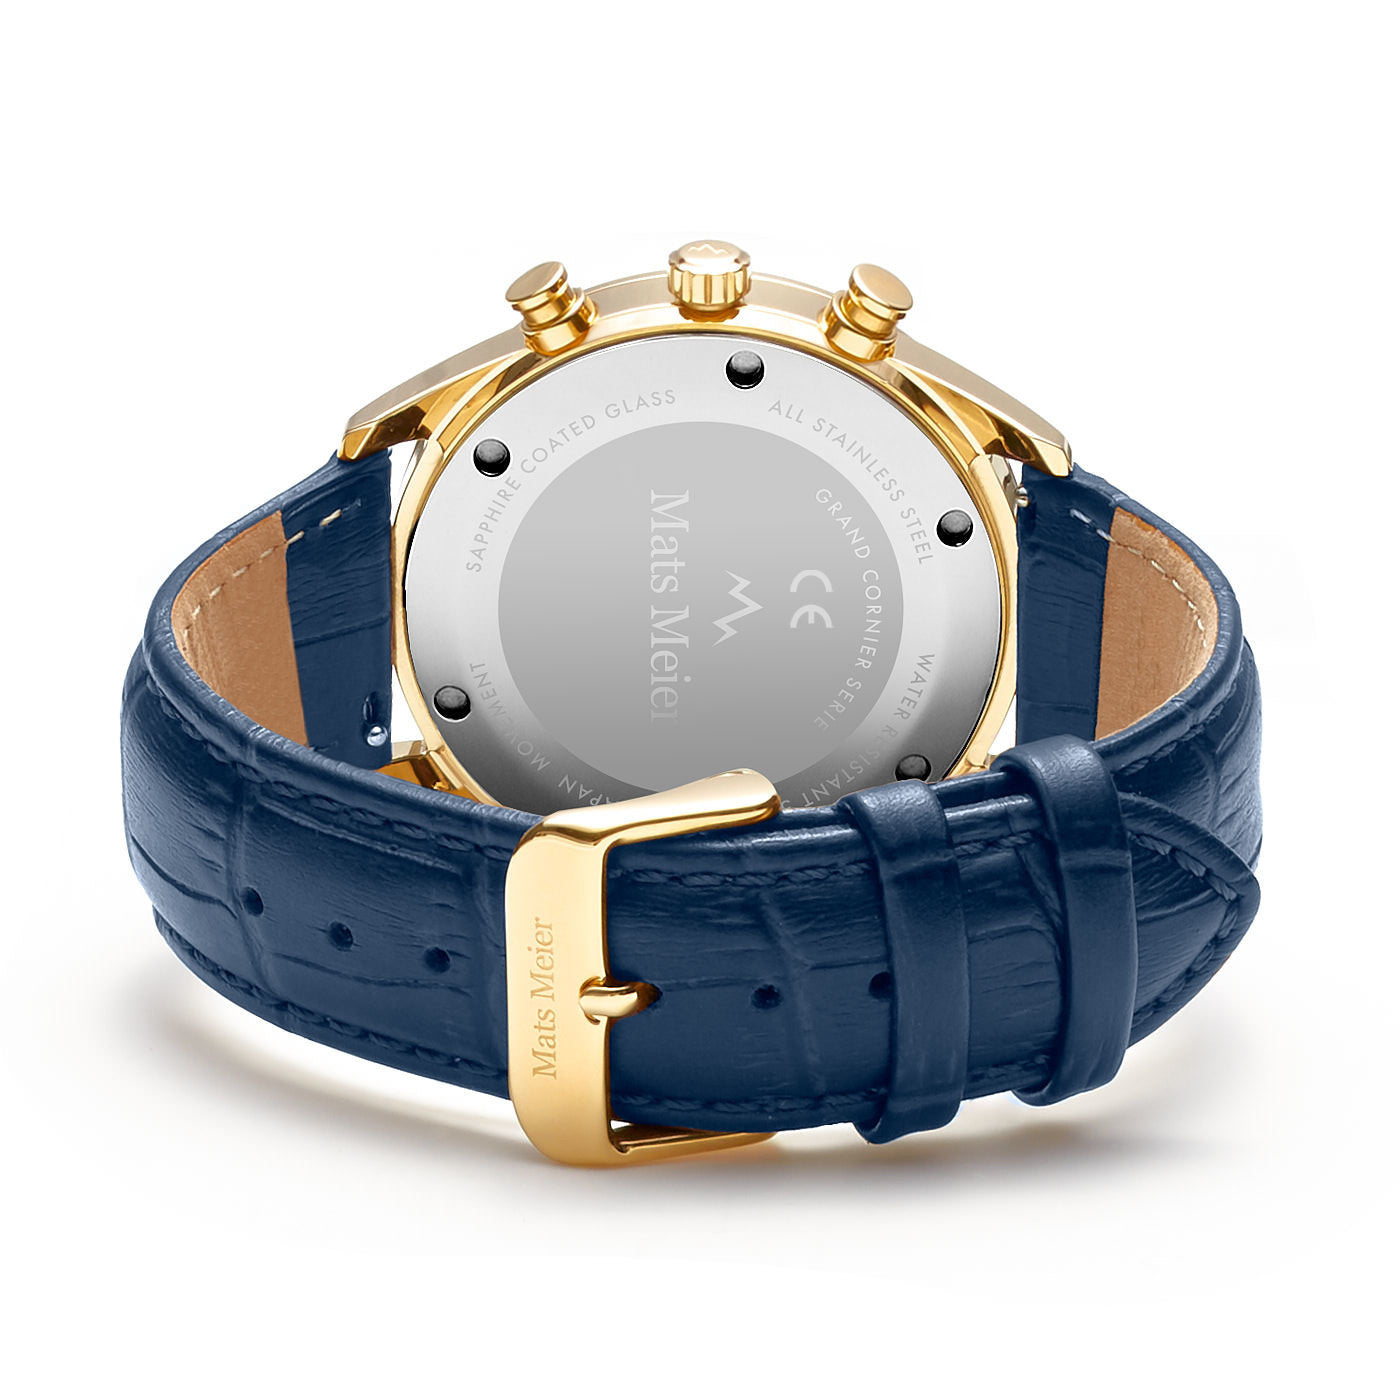 Grand Cornier chronograph mens watch blue / gold colored